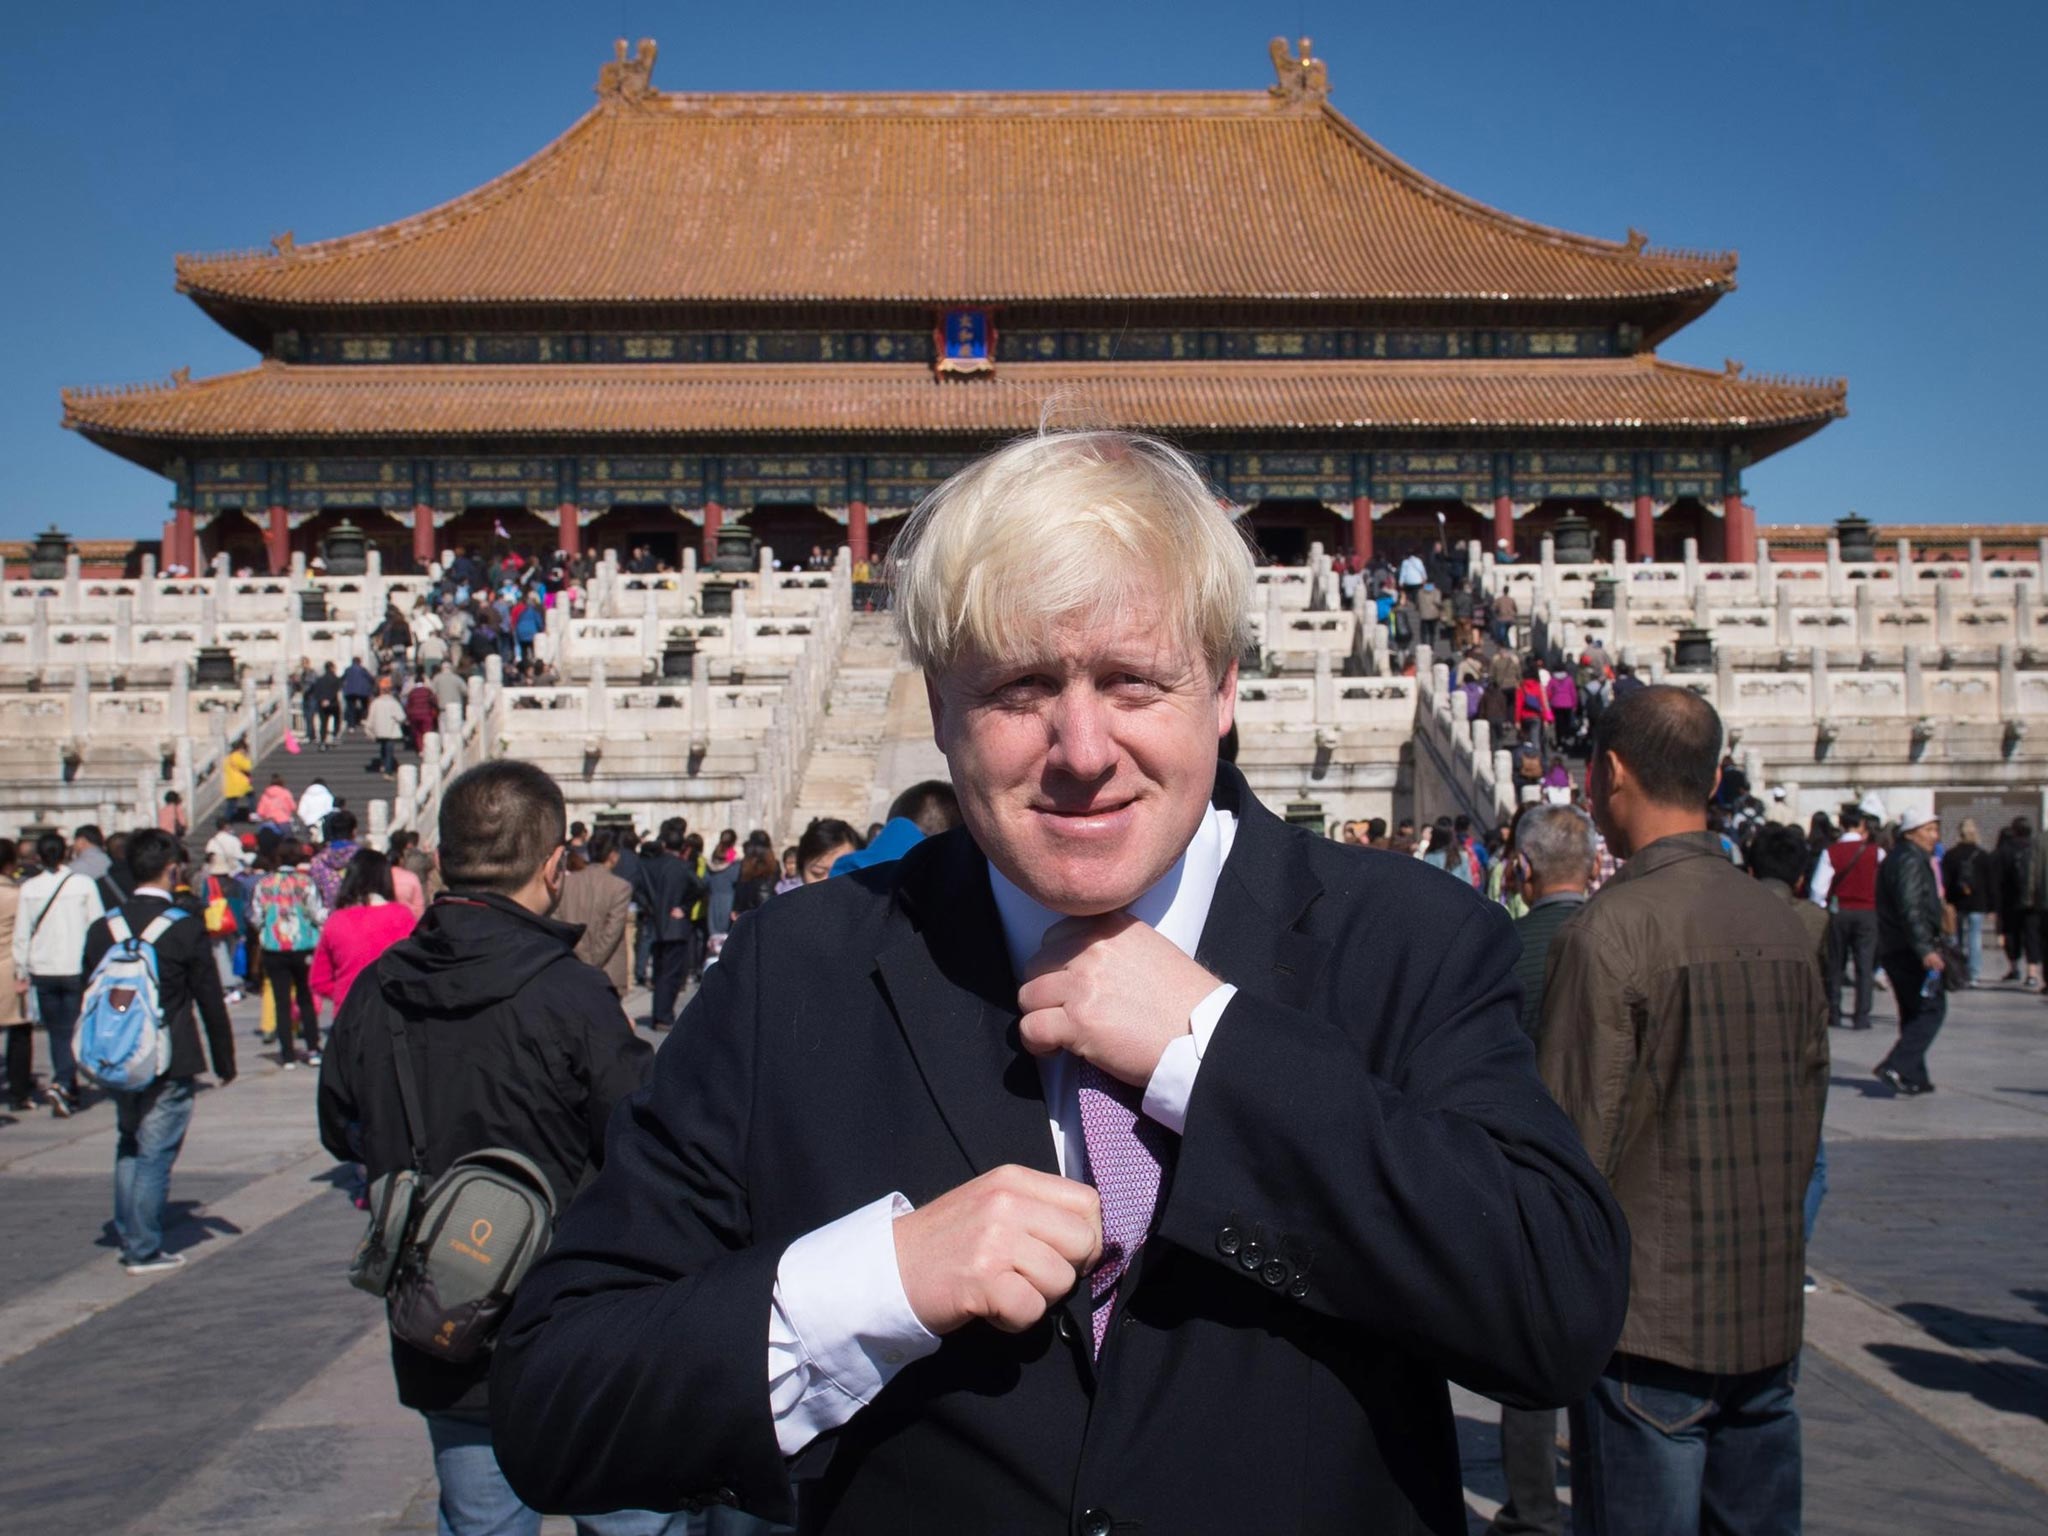 London Mayor Boris Johnson tours the Forbidden City in Beijing